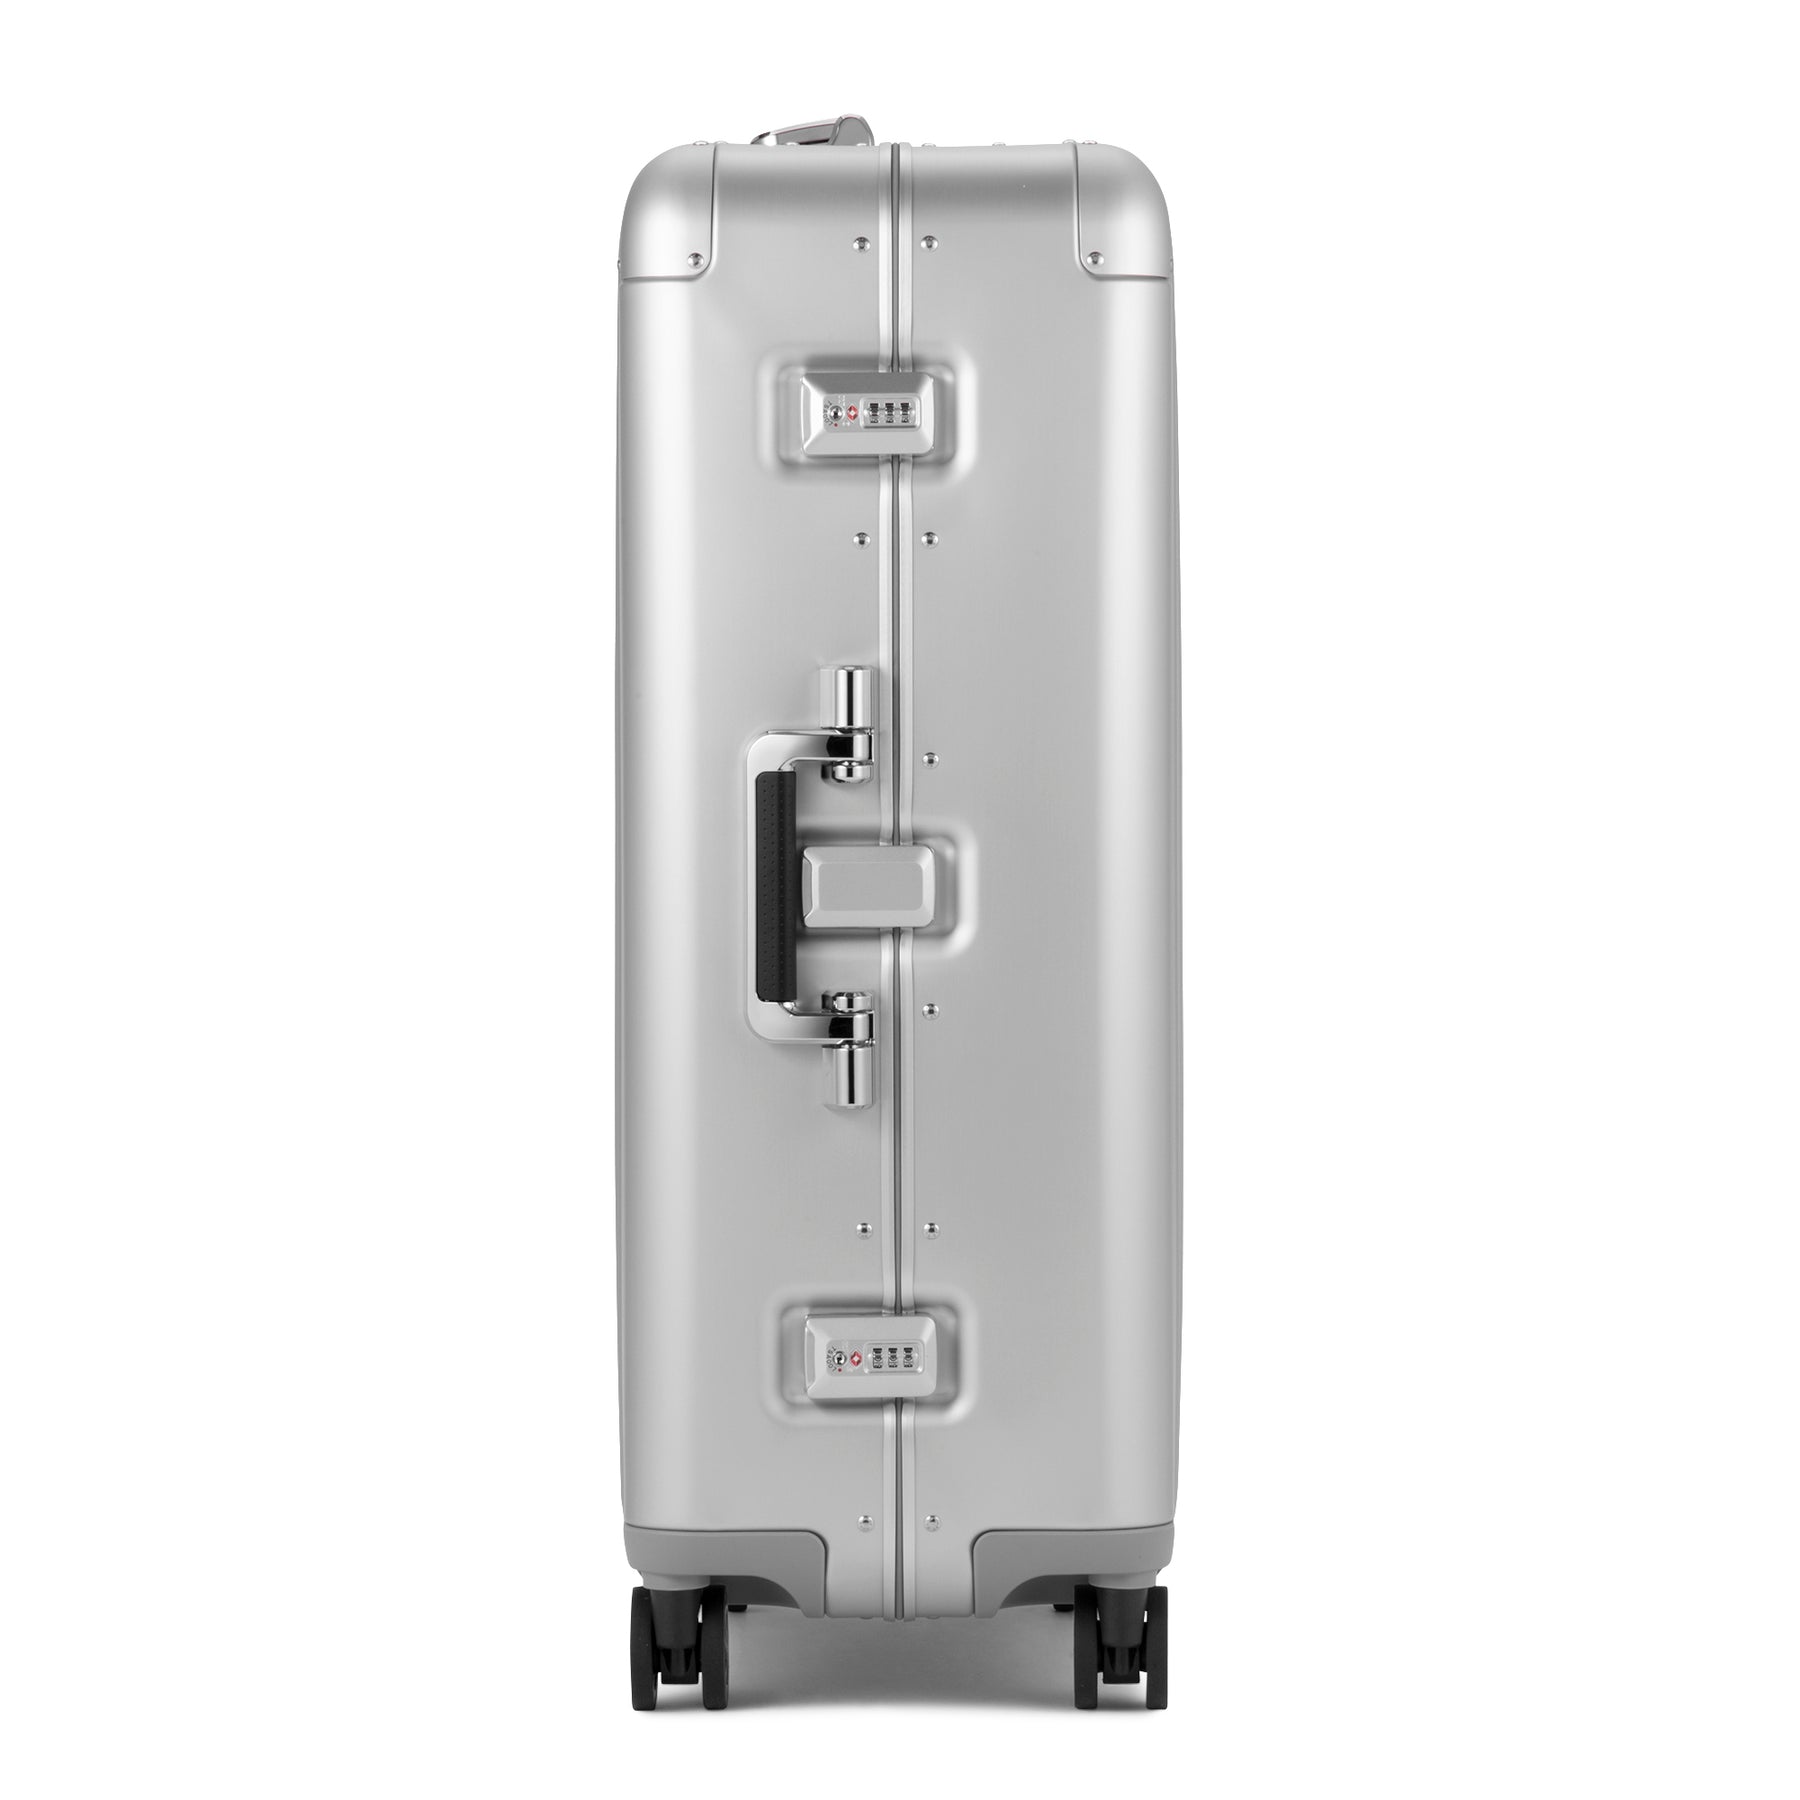 Classic Aluminum 3.0 | Check-In Travel Case 88L 94404